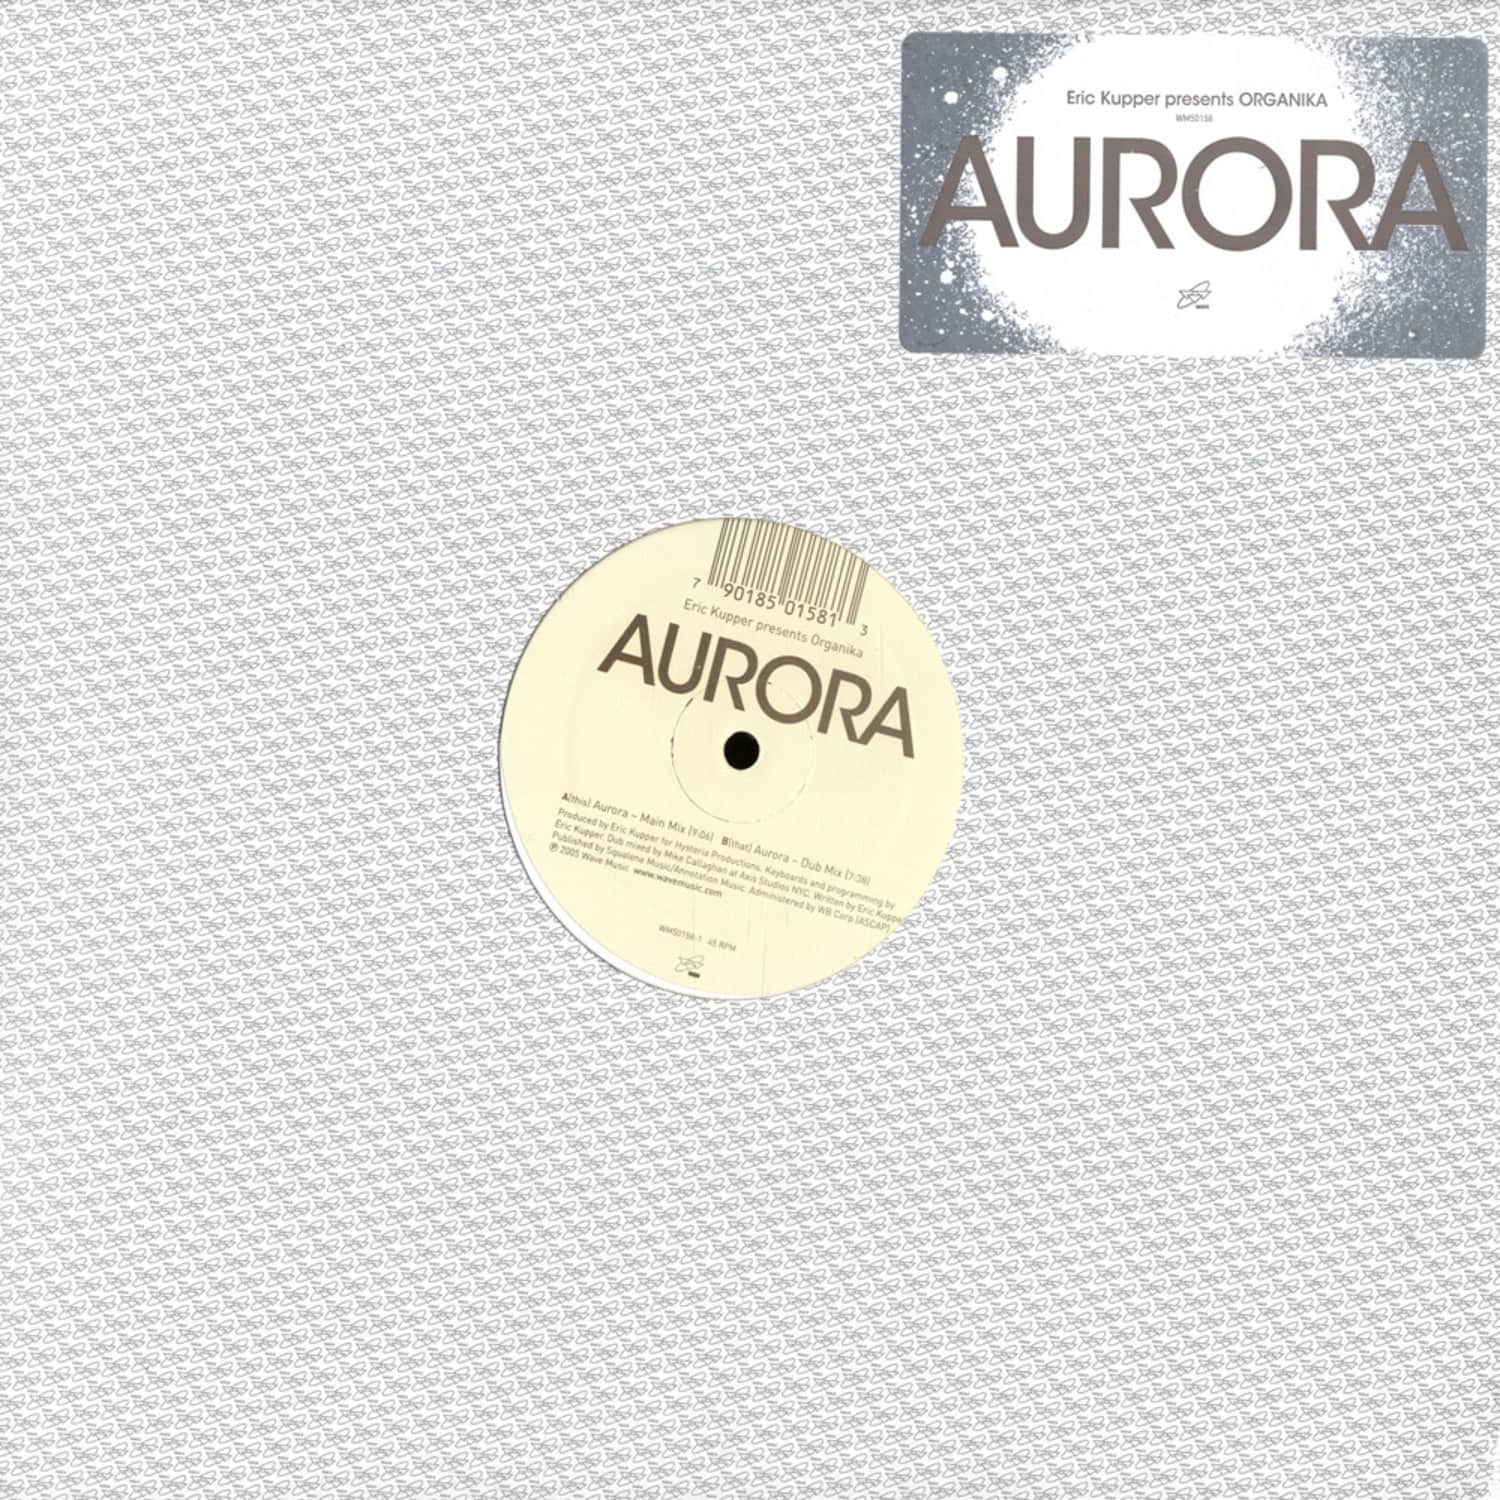 Eric Kupper presents Organika - AURORA